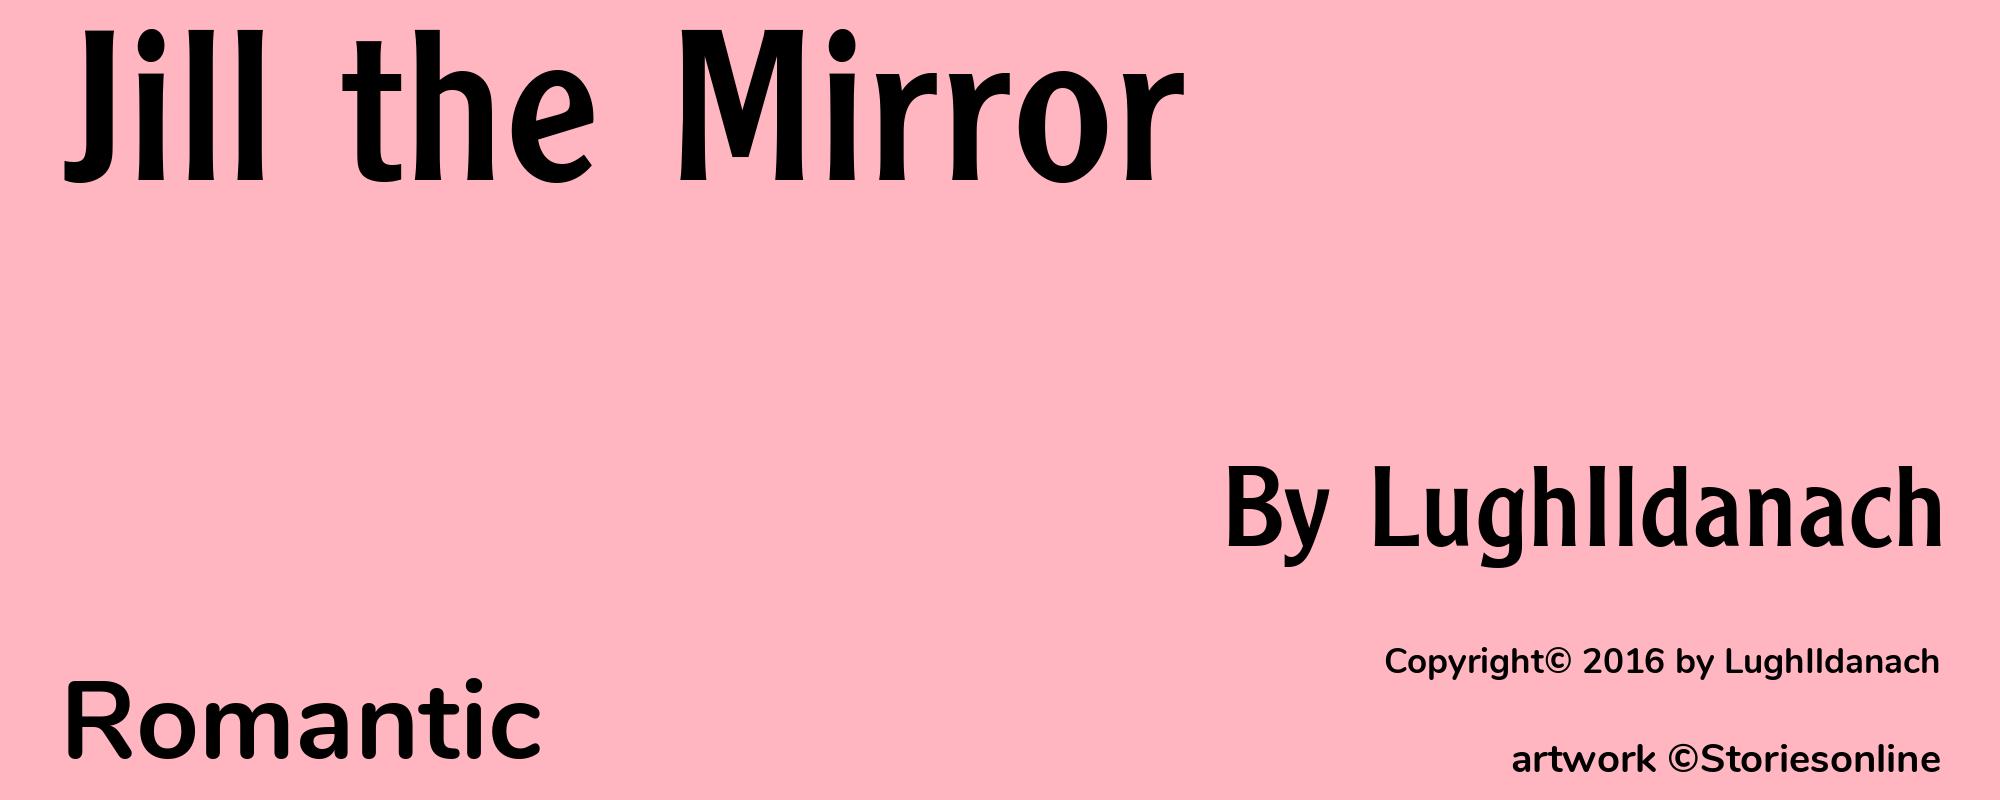 Jill the Mirror - Cover